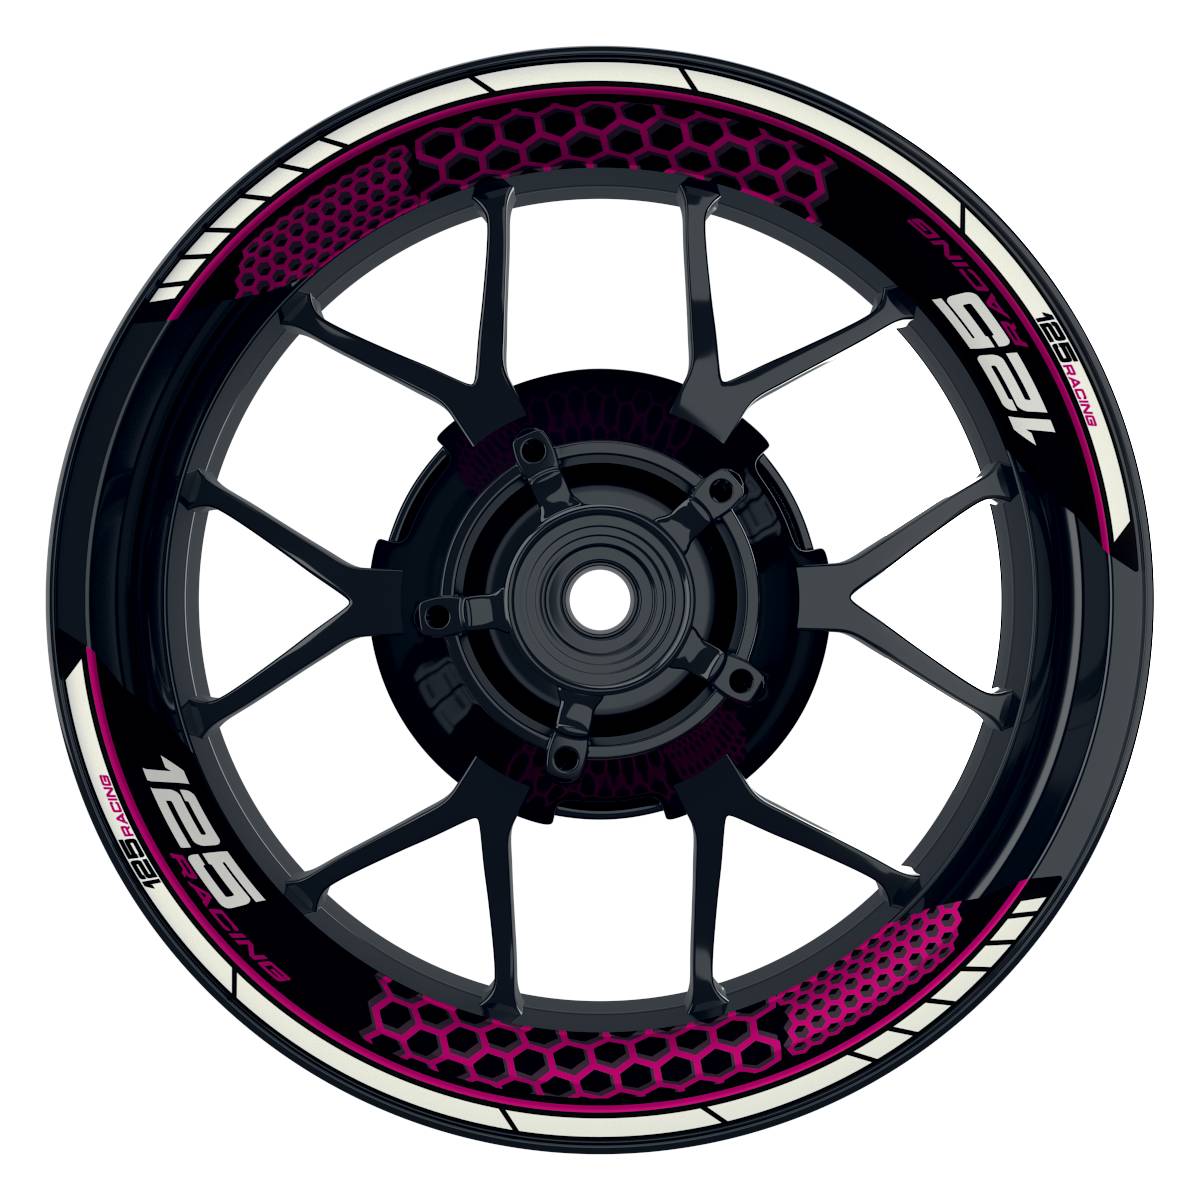 KTM Racing 125 Hexagon schwarz pink Frontansicht